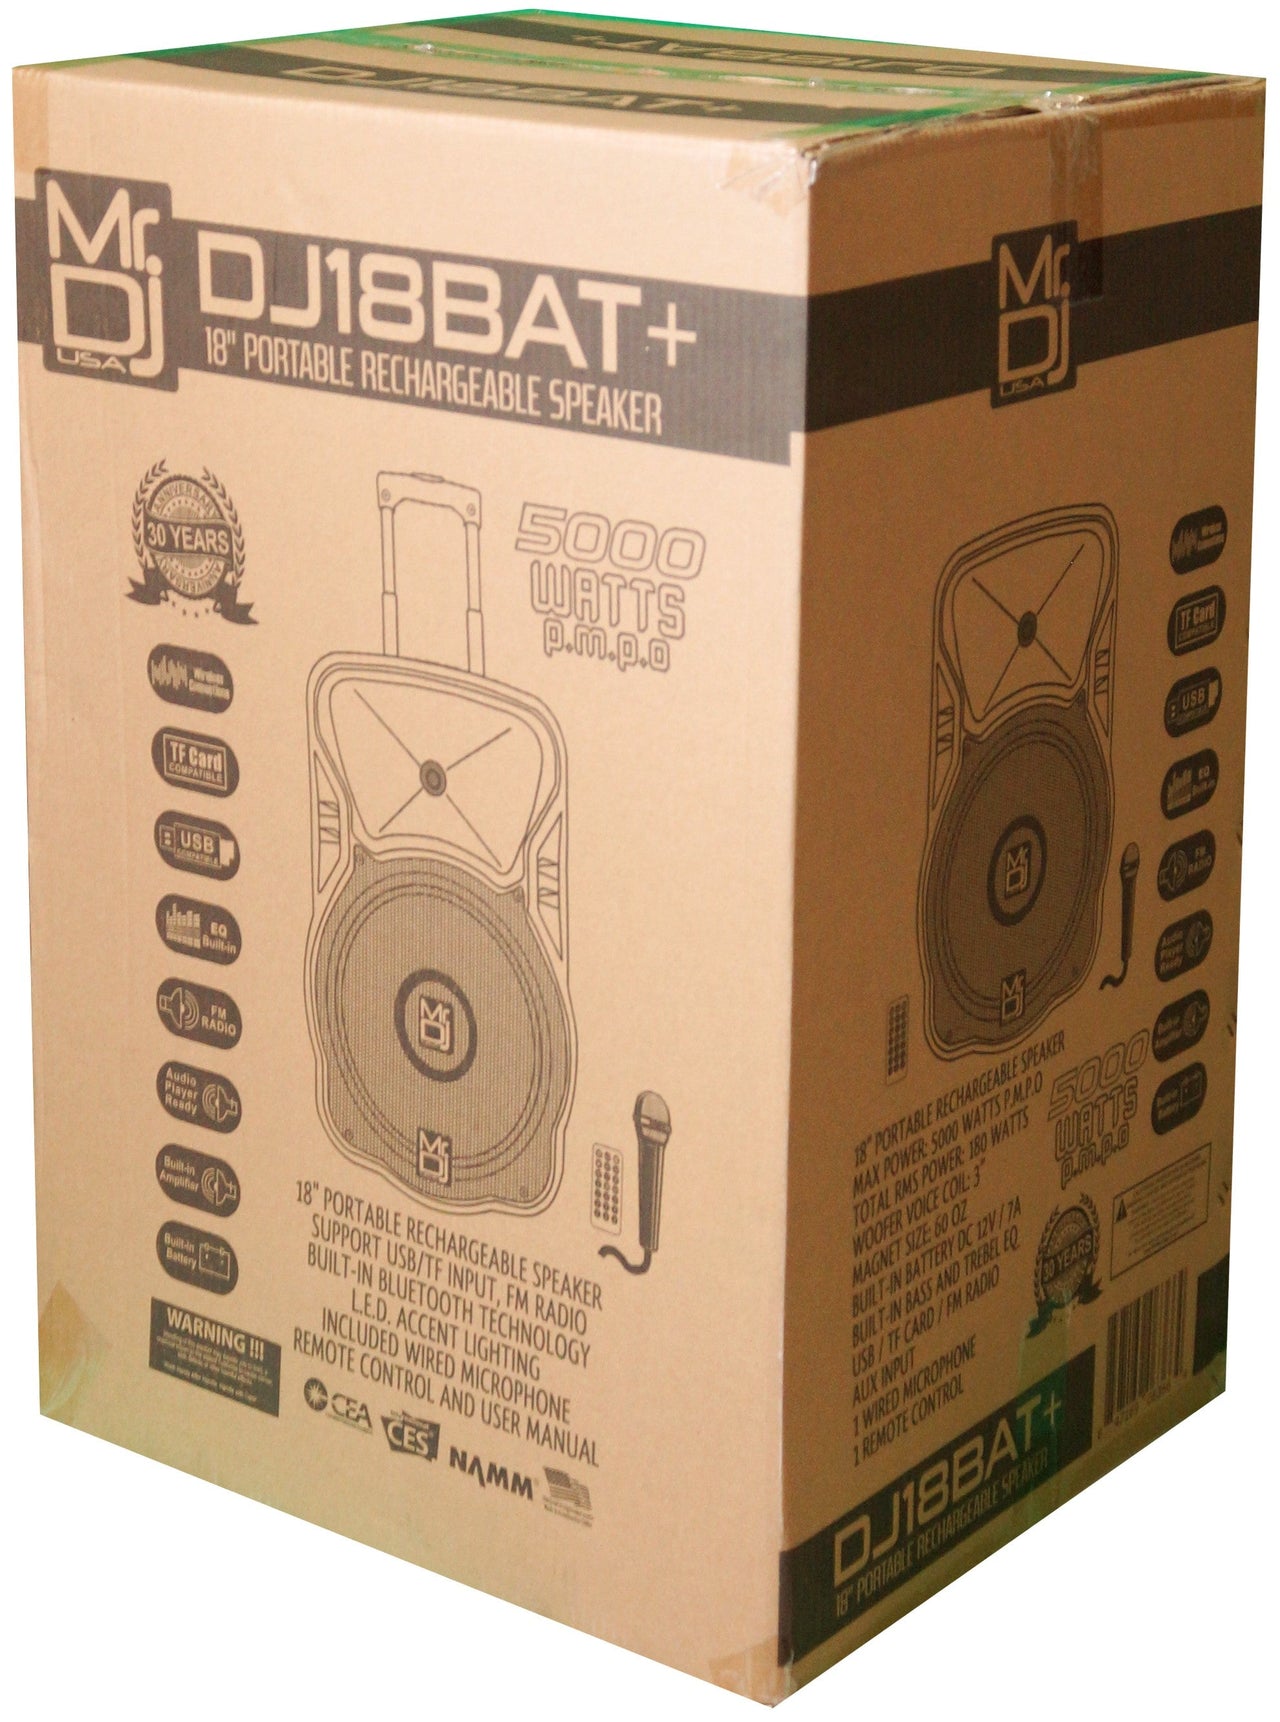 Pair of MR DJ DJ18BAT+ 18" Portable Bluetooth Speaker + Speaker Stand